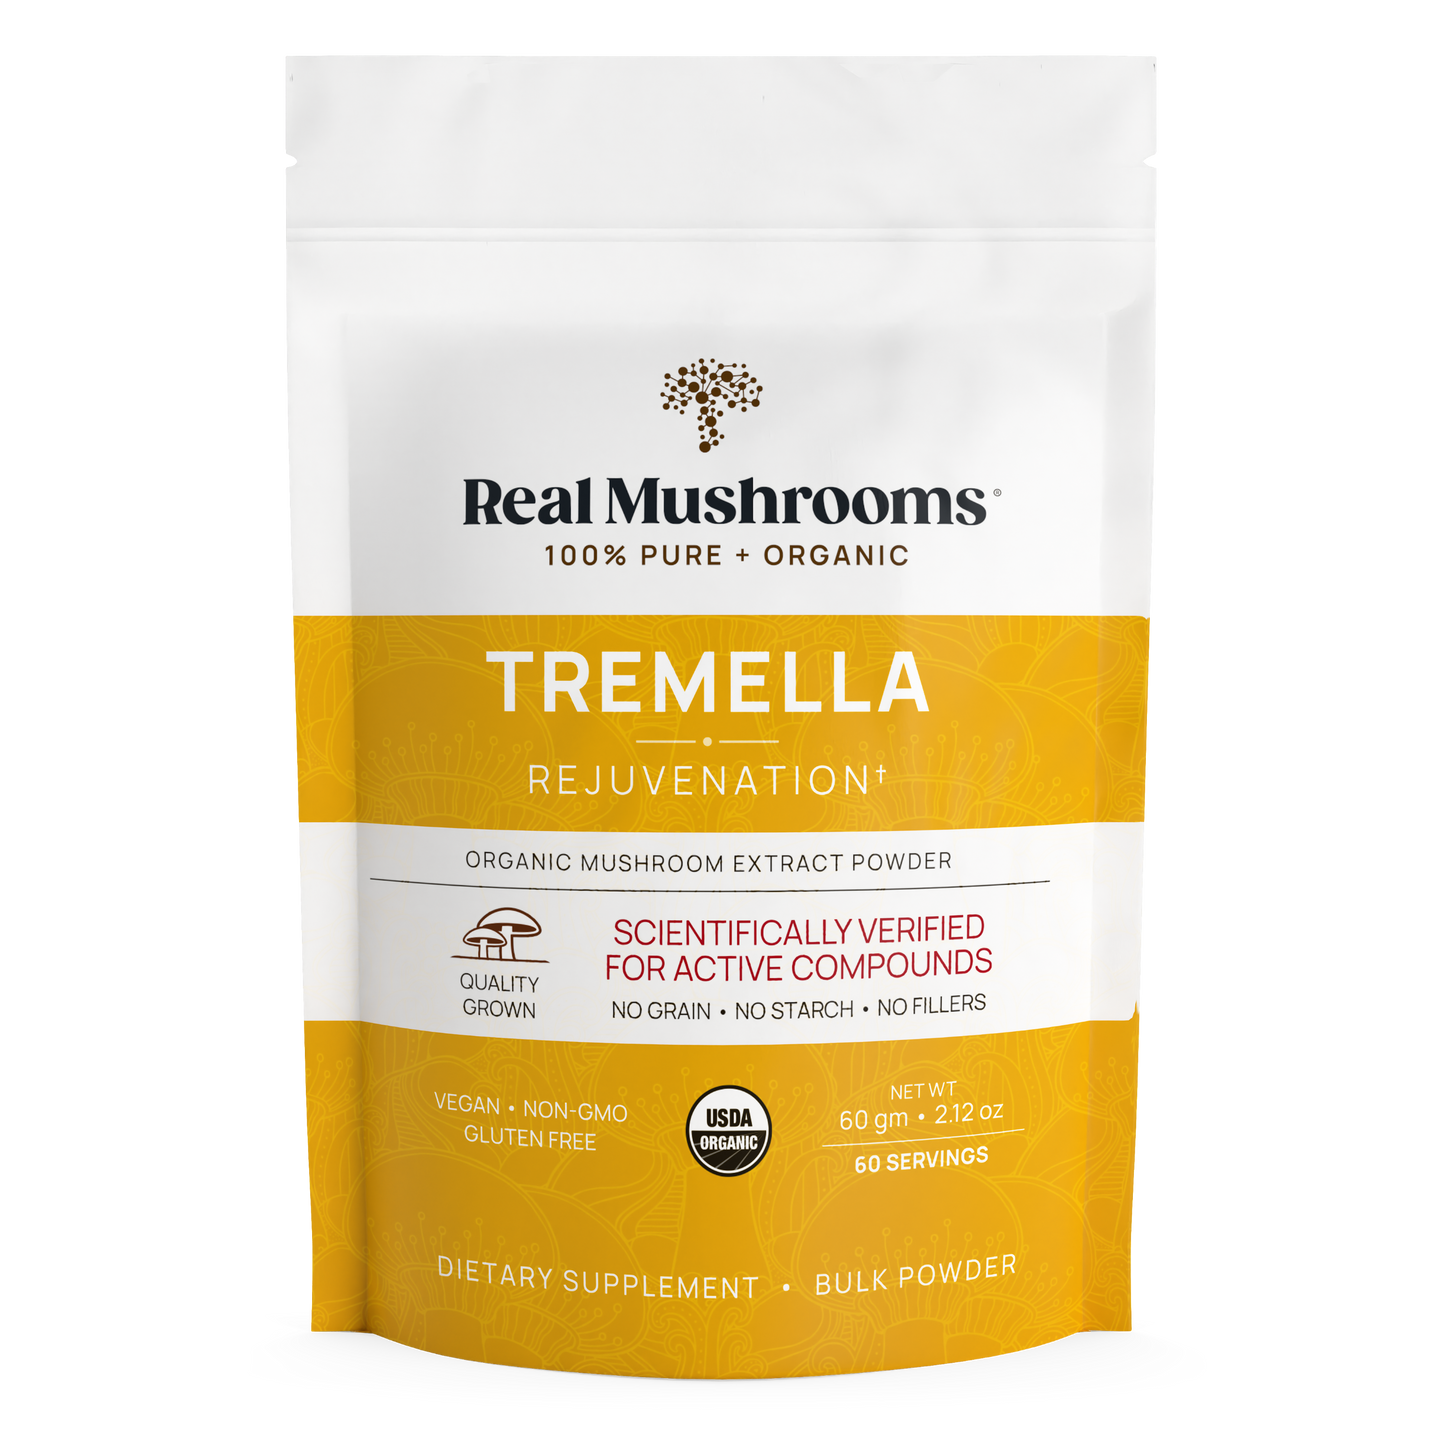 Real Mushrooms Organic Tremella Mushroom Extract Powder for Pets.